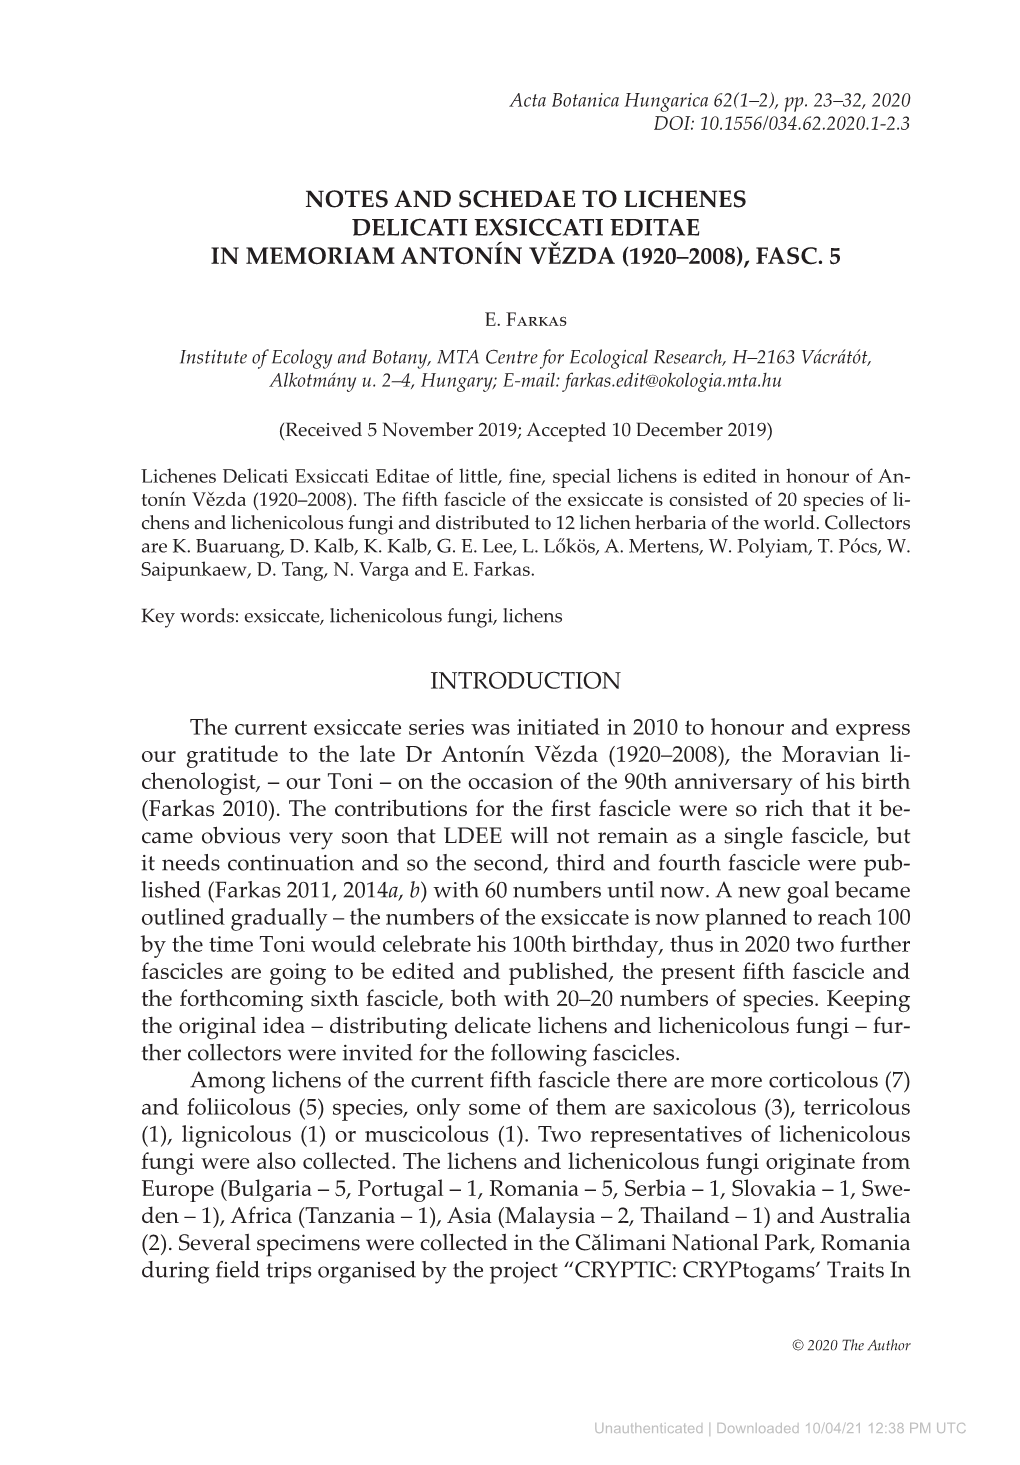 Notes and Schedae to Lichenes Delicati Exsiccati Editae in Memoriam Antonín Vězda (1920–2008), Fasc. 5